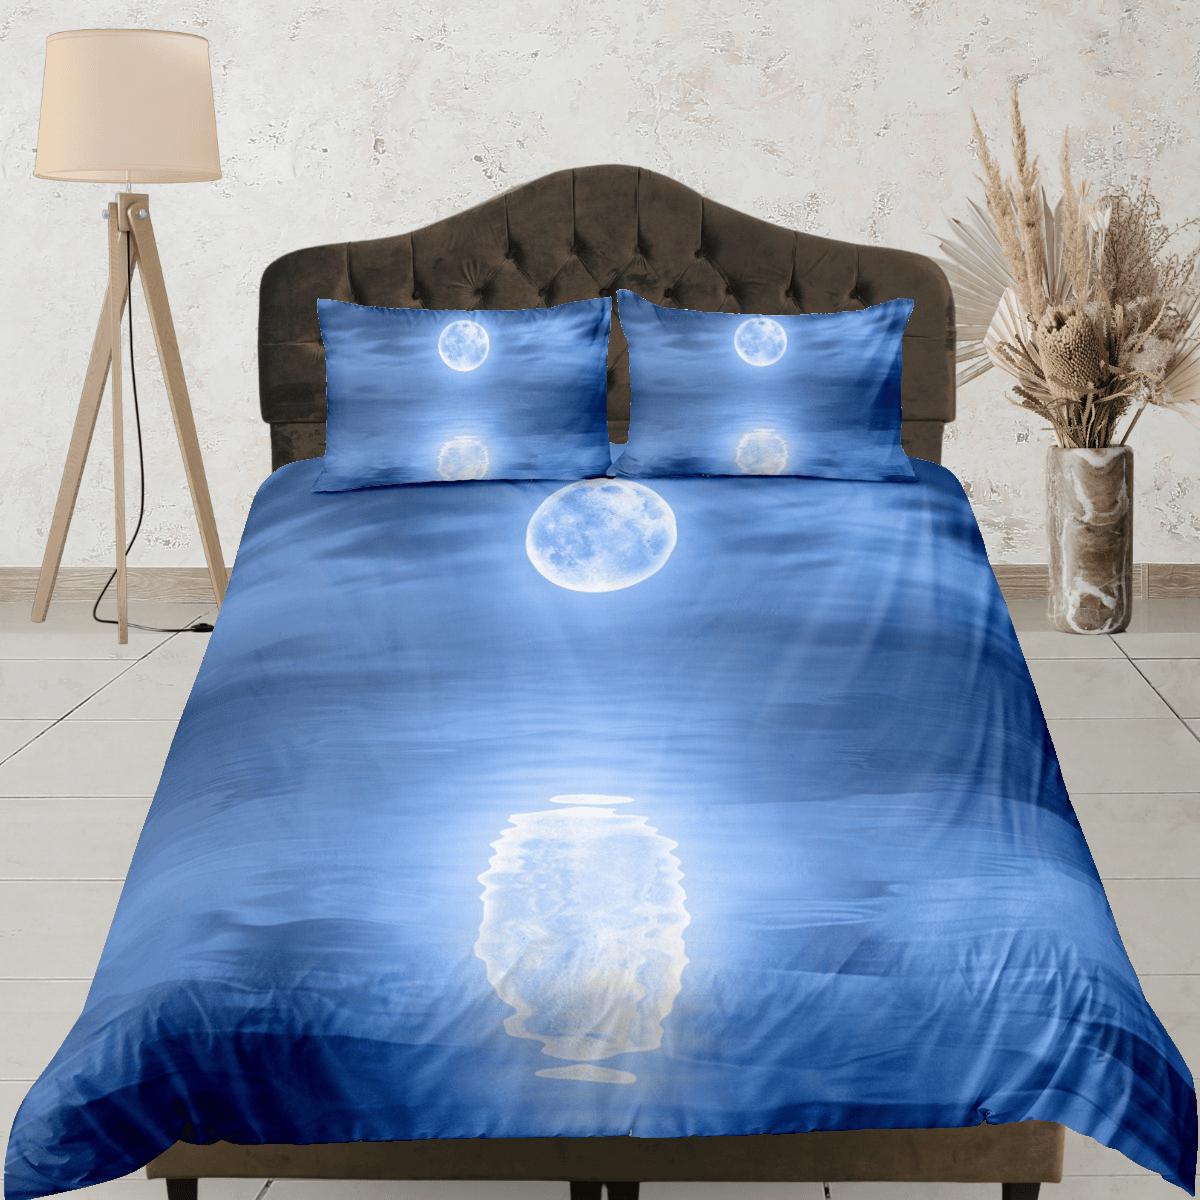 daintyduvet Full Moon Over the Sea Duvet Cover Set Colorful Bedspread, Dorm Bedding Pillowcase